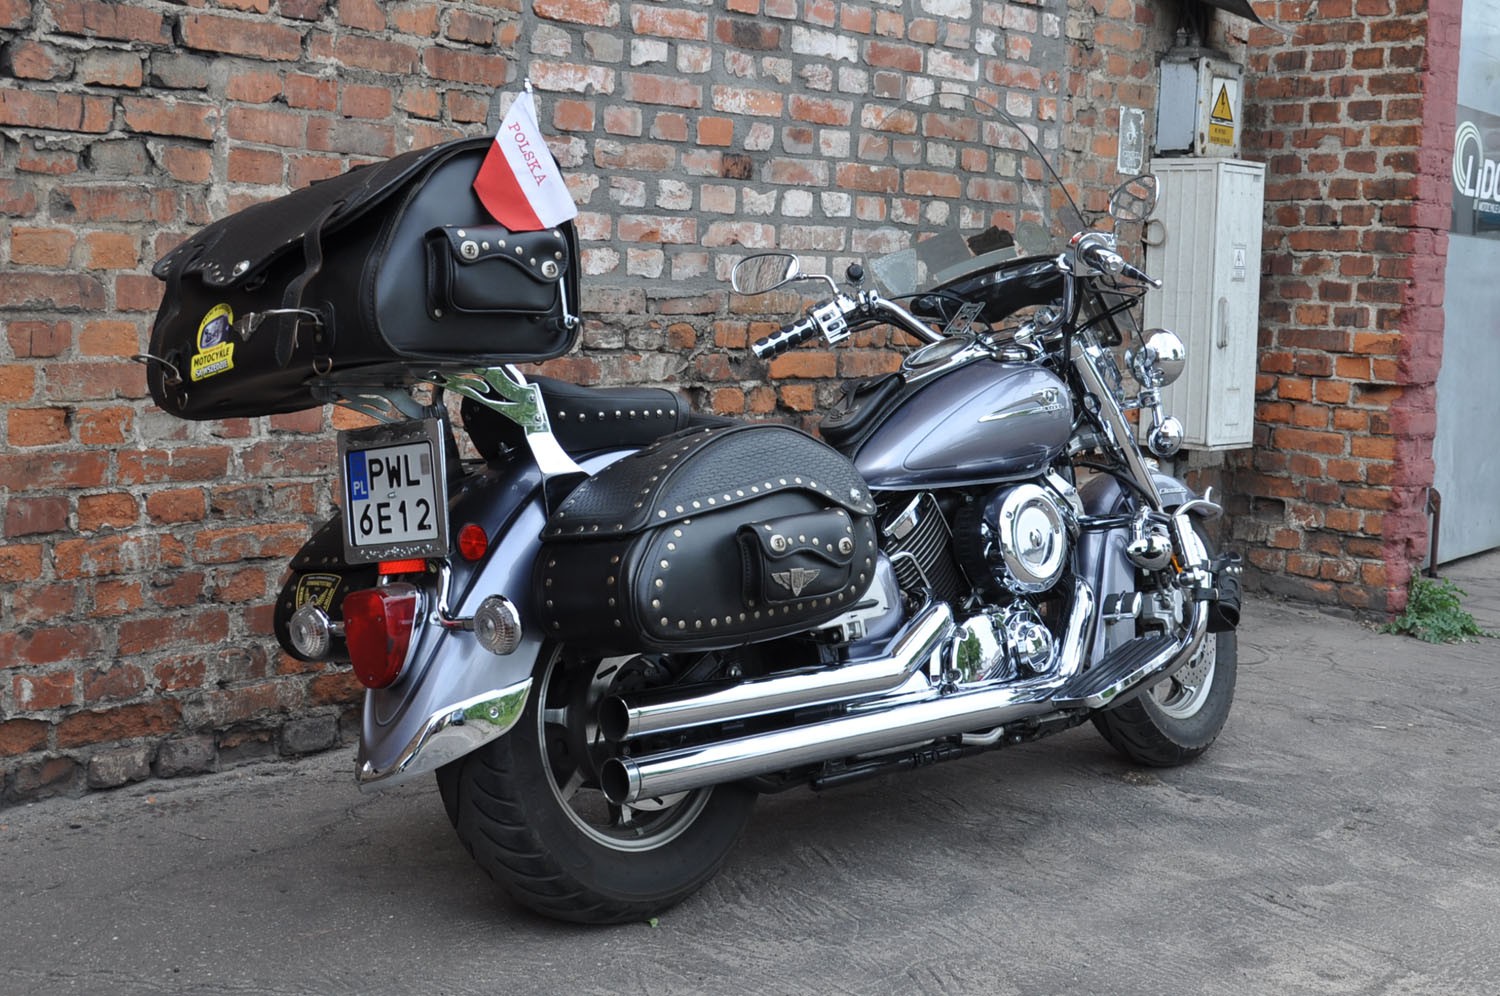 Обзор мотоцикла yamaha xvs 1100 drag star (v-star) — bikeswiki - энциклопедия японских мотоциклов